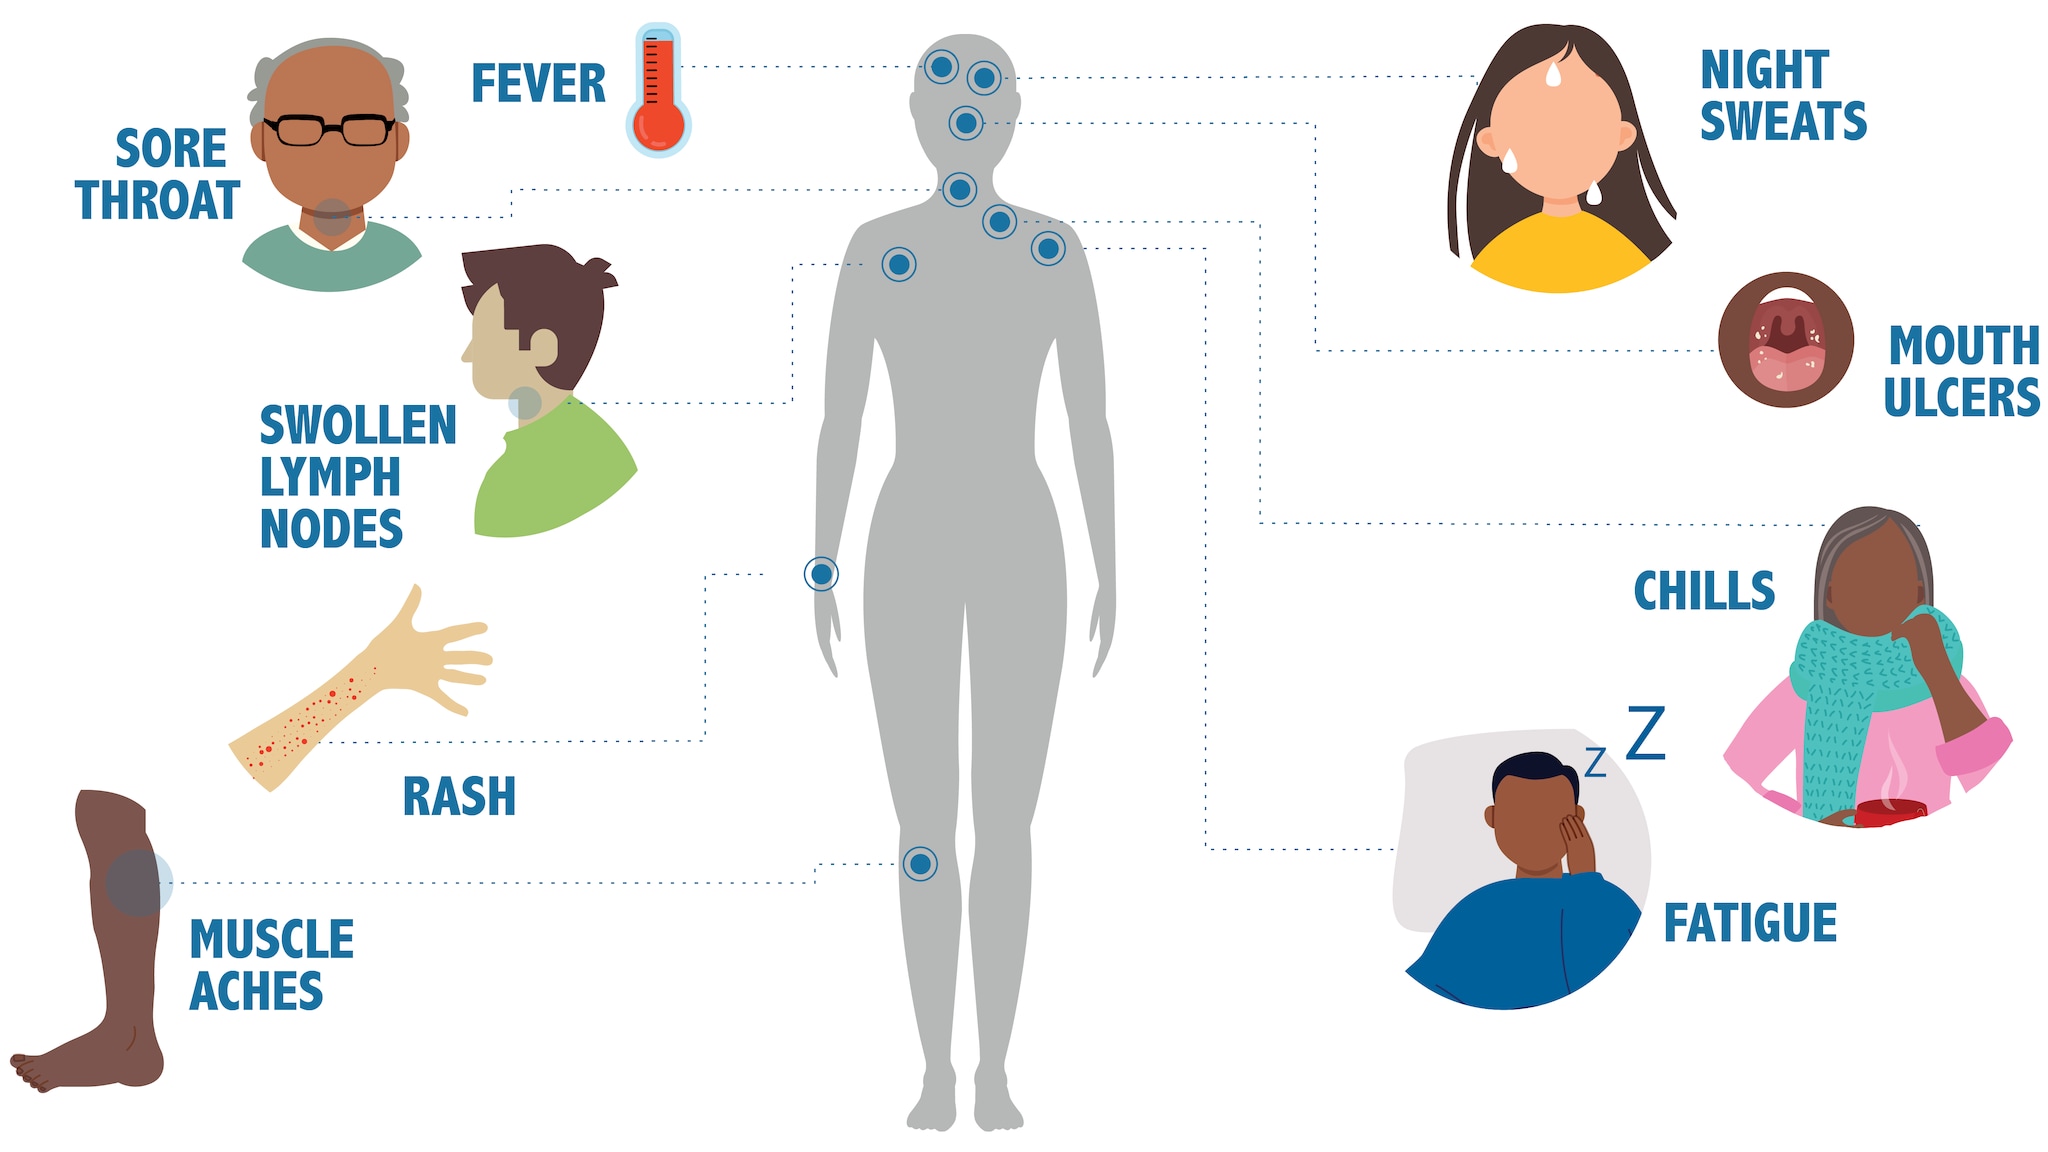 Image of flu symptoms.